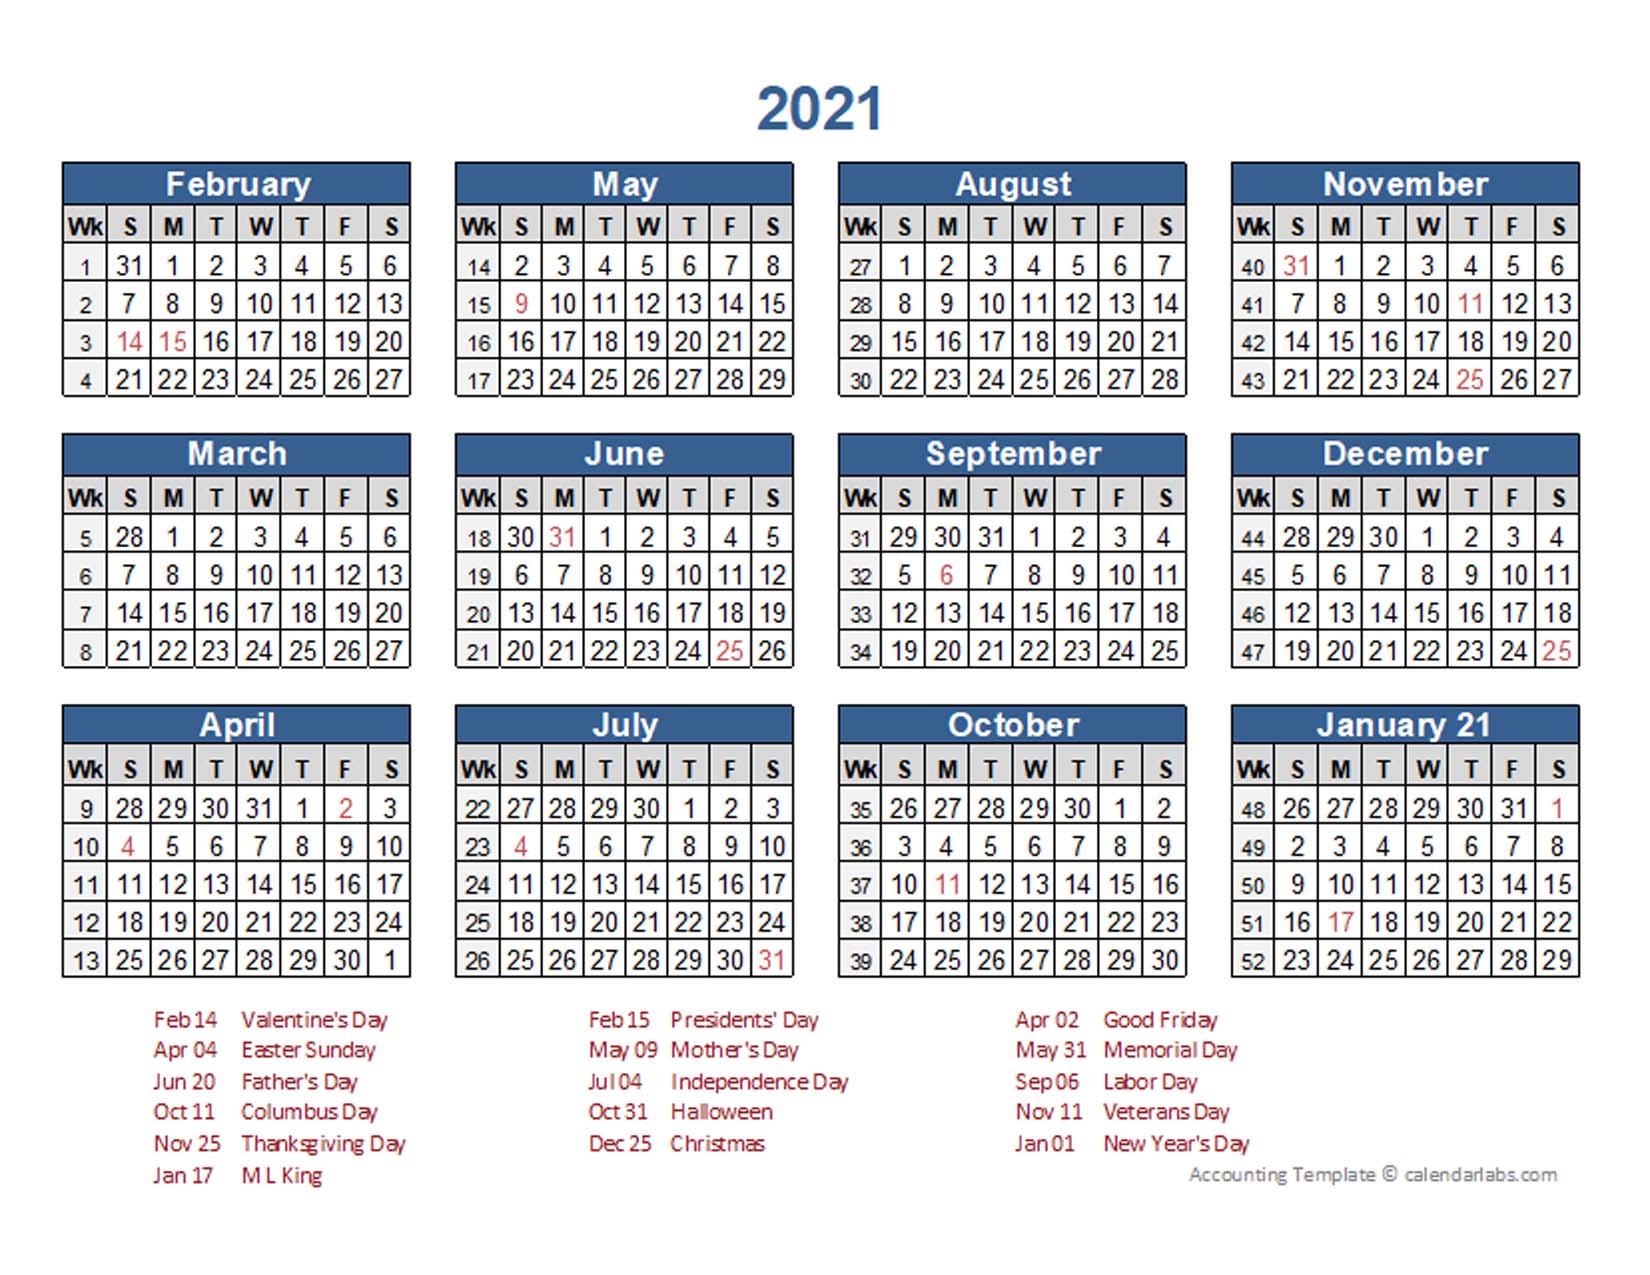 2021 Retail Accounting Calendar 445 Free Printable